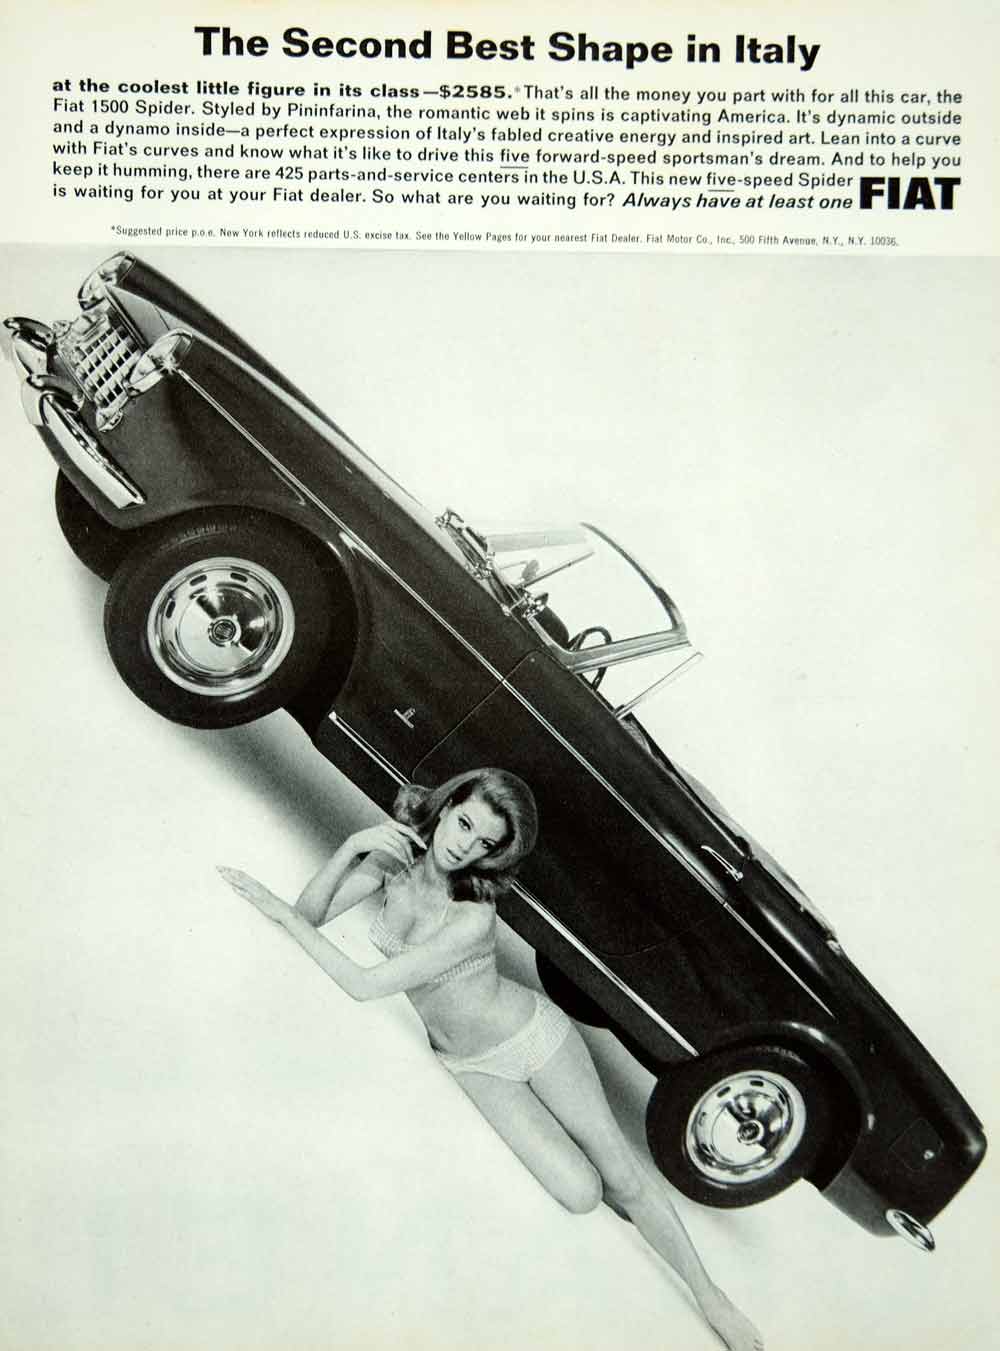 1965 Ad Vintage Fiat 1500 Spider Pininfarina Styling Sports Car Girl YMMA3